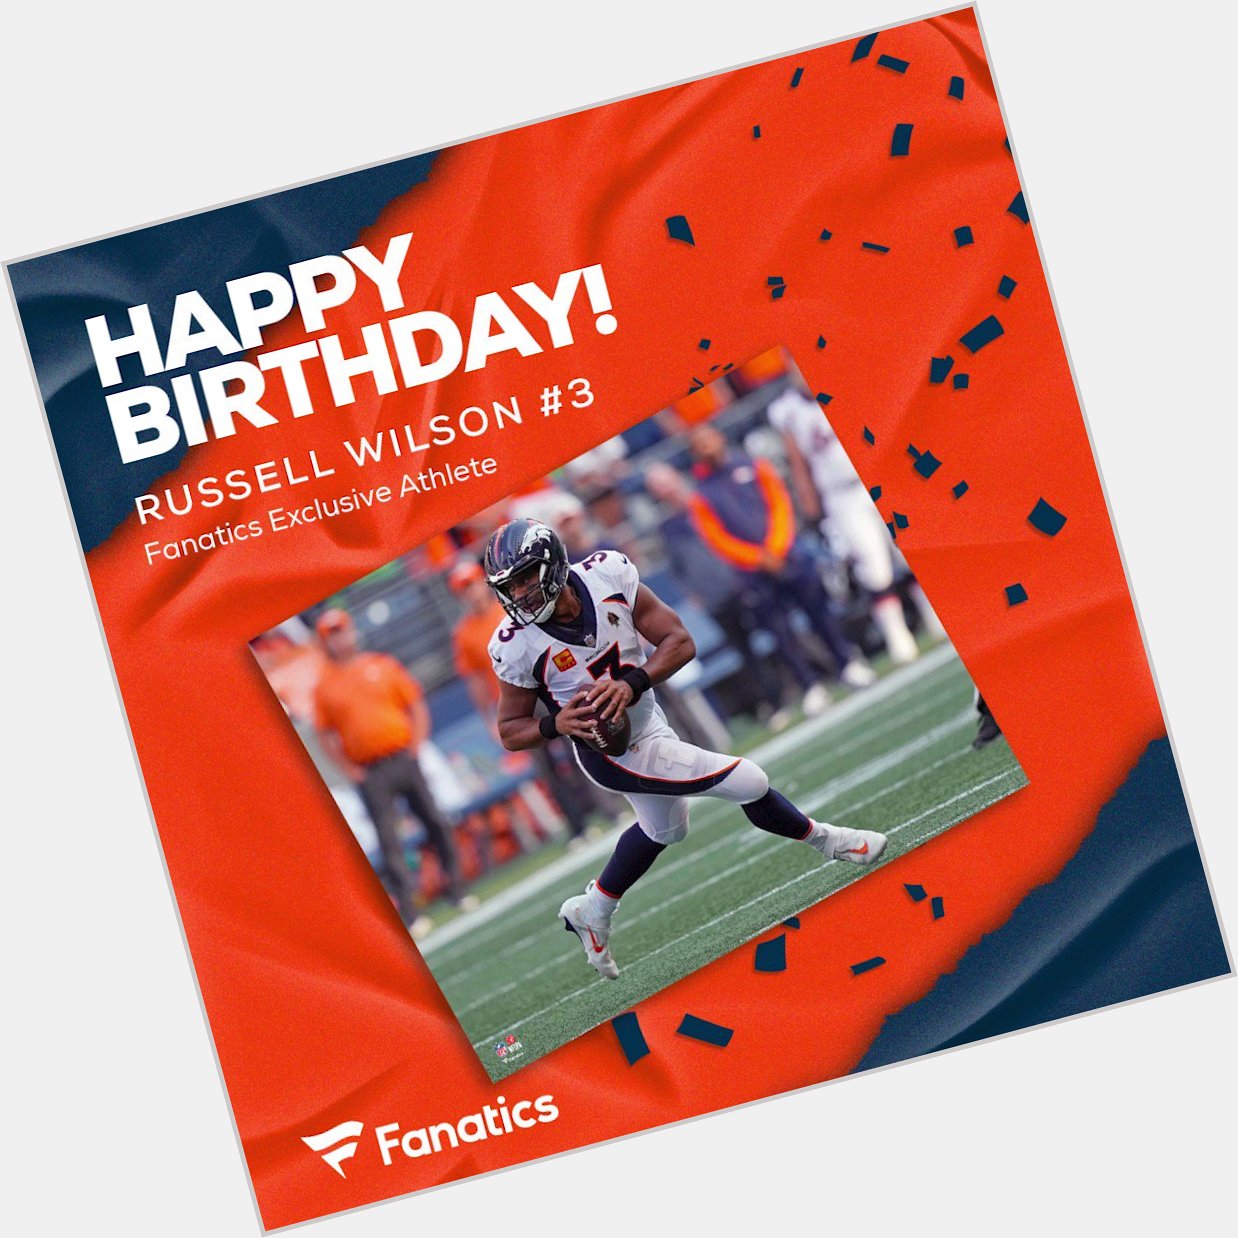 Happy Birthday to athlete Russell Wilson!   